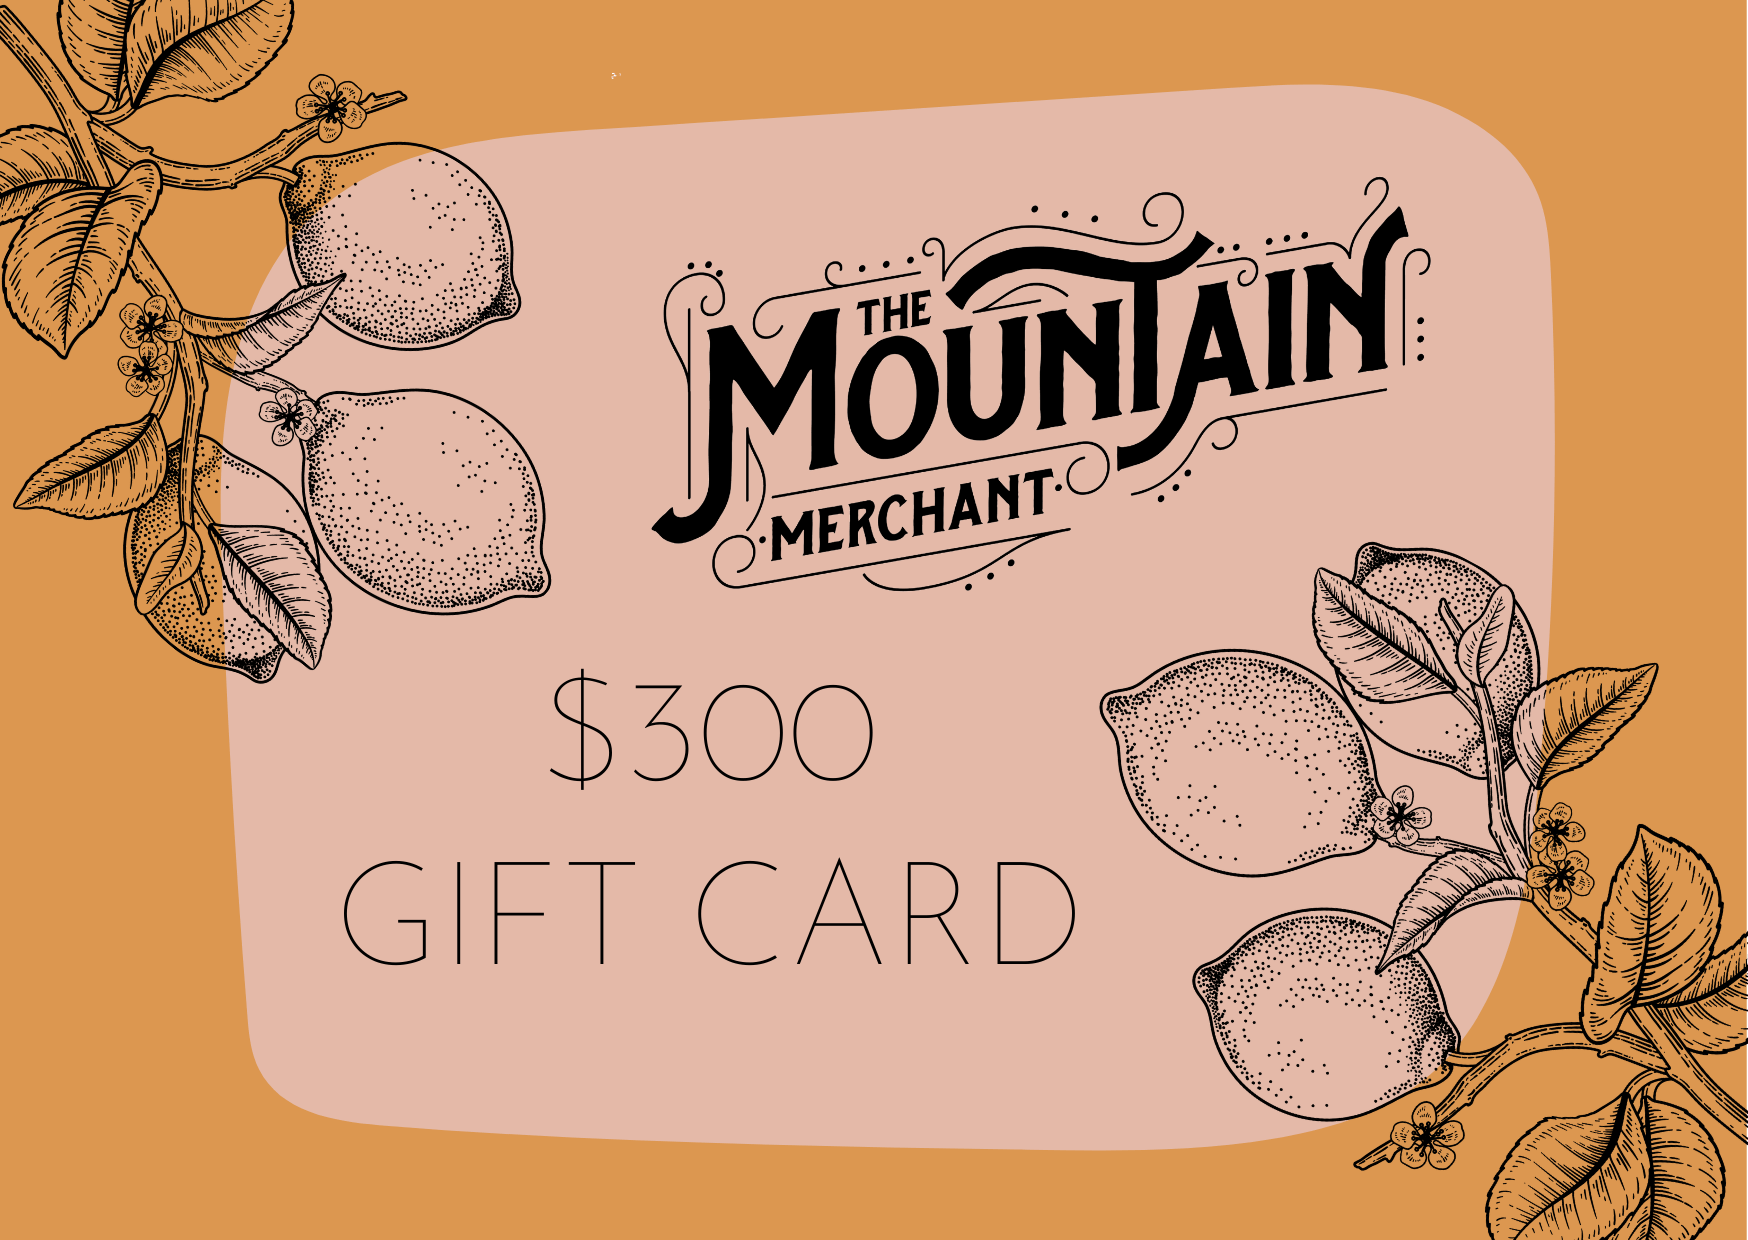 The Mountain Merchant - Gift Card $300 -The Mountain Merchant -The Mountain Merchant